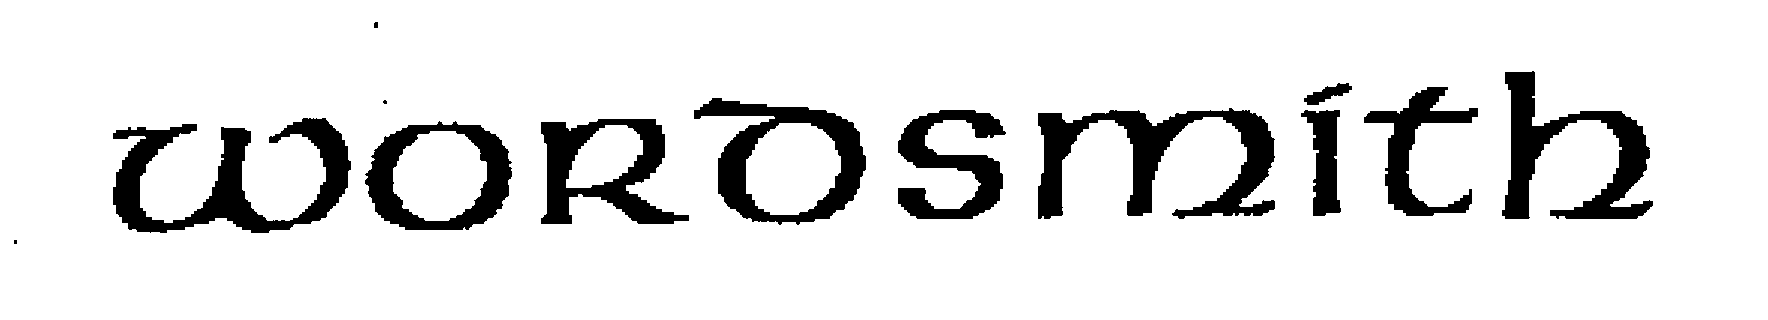 Trademark Logo WORDSMITH